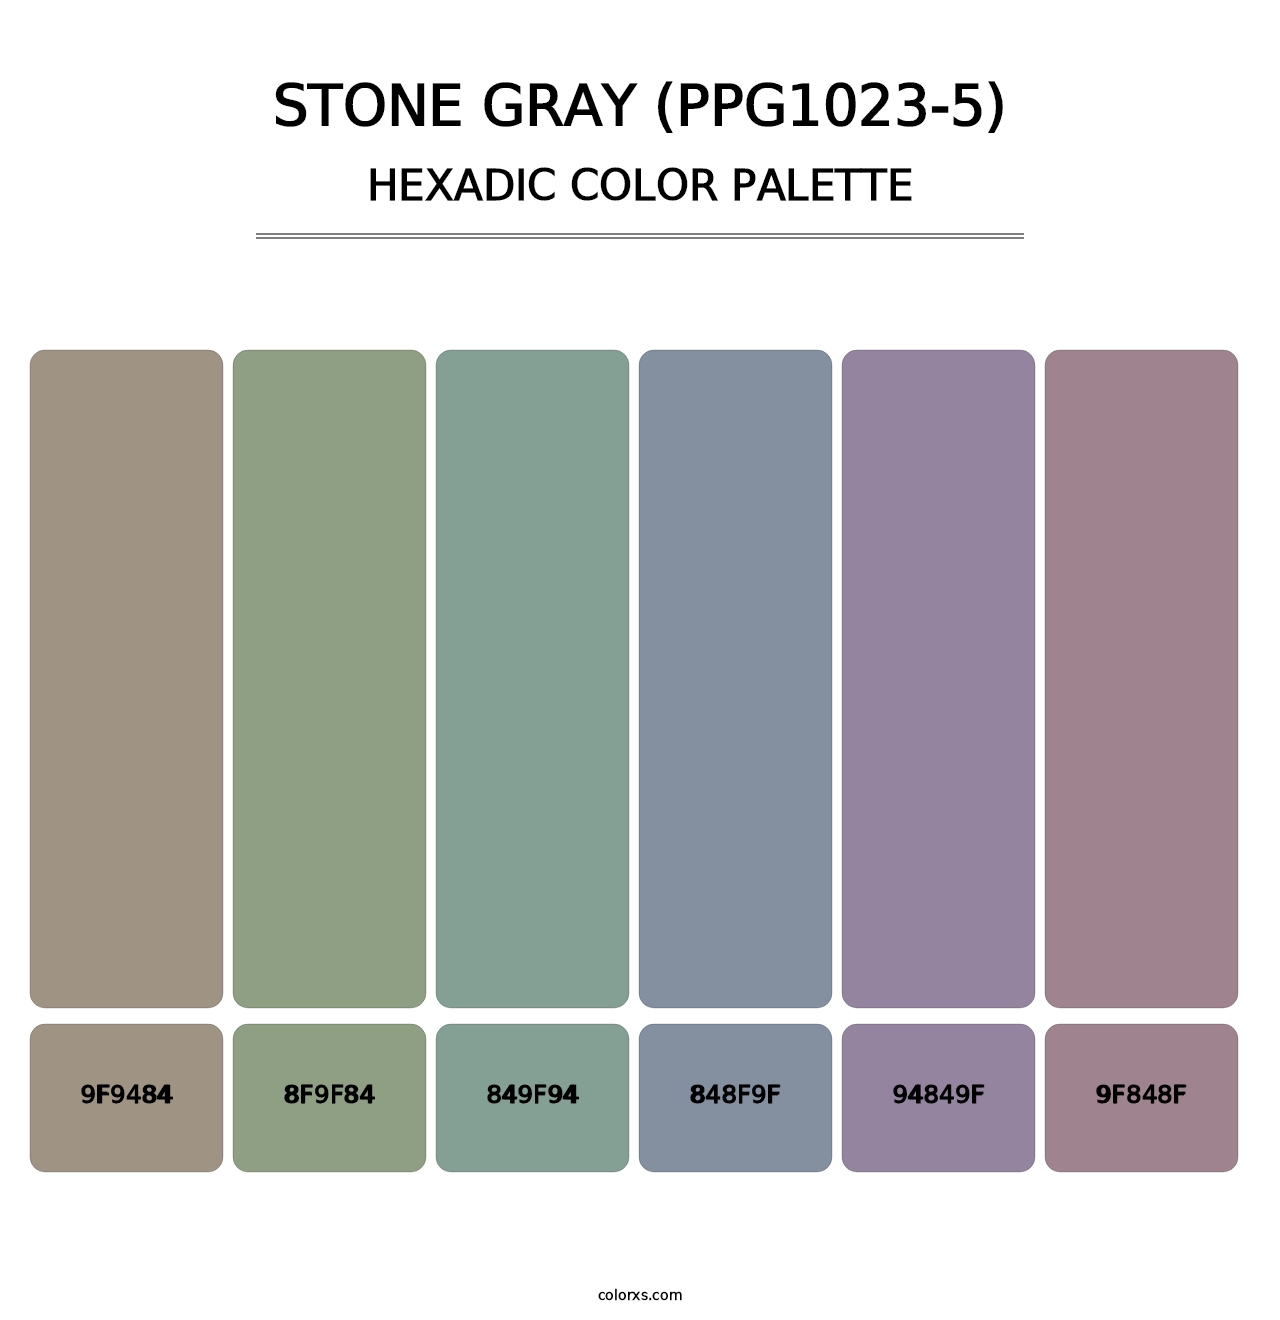 Stone Gray (PPG1023-5) - Hexadic Color Palette